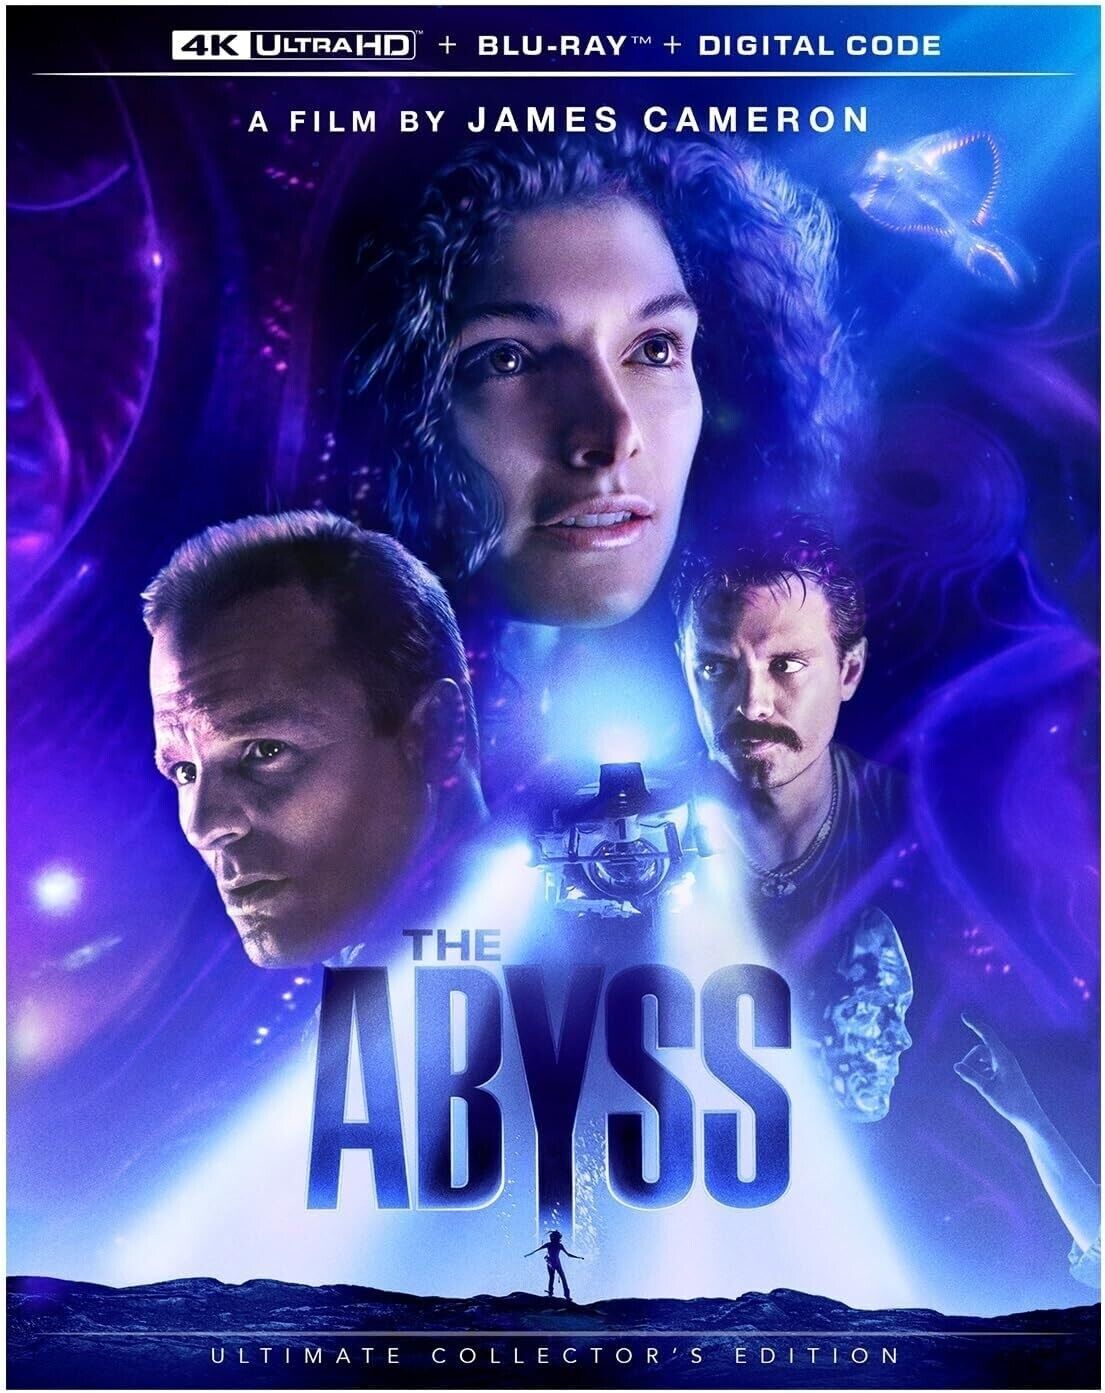 The Abyss 4K (4K UHD + Blu-ray + Digital Code + Slipcover) BRAND NEW